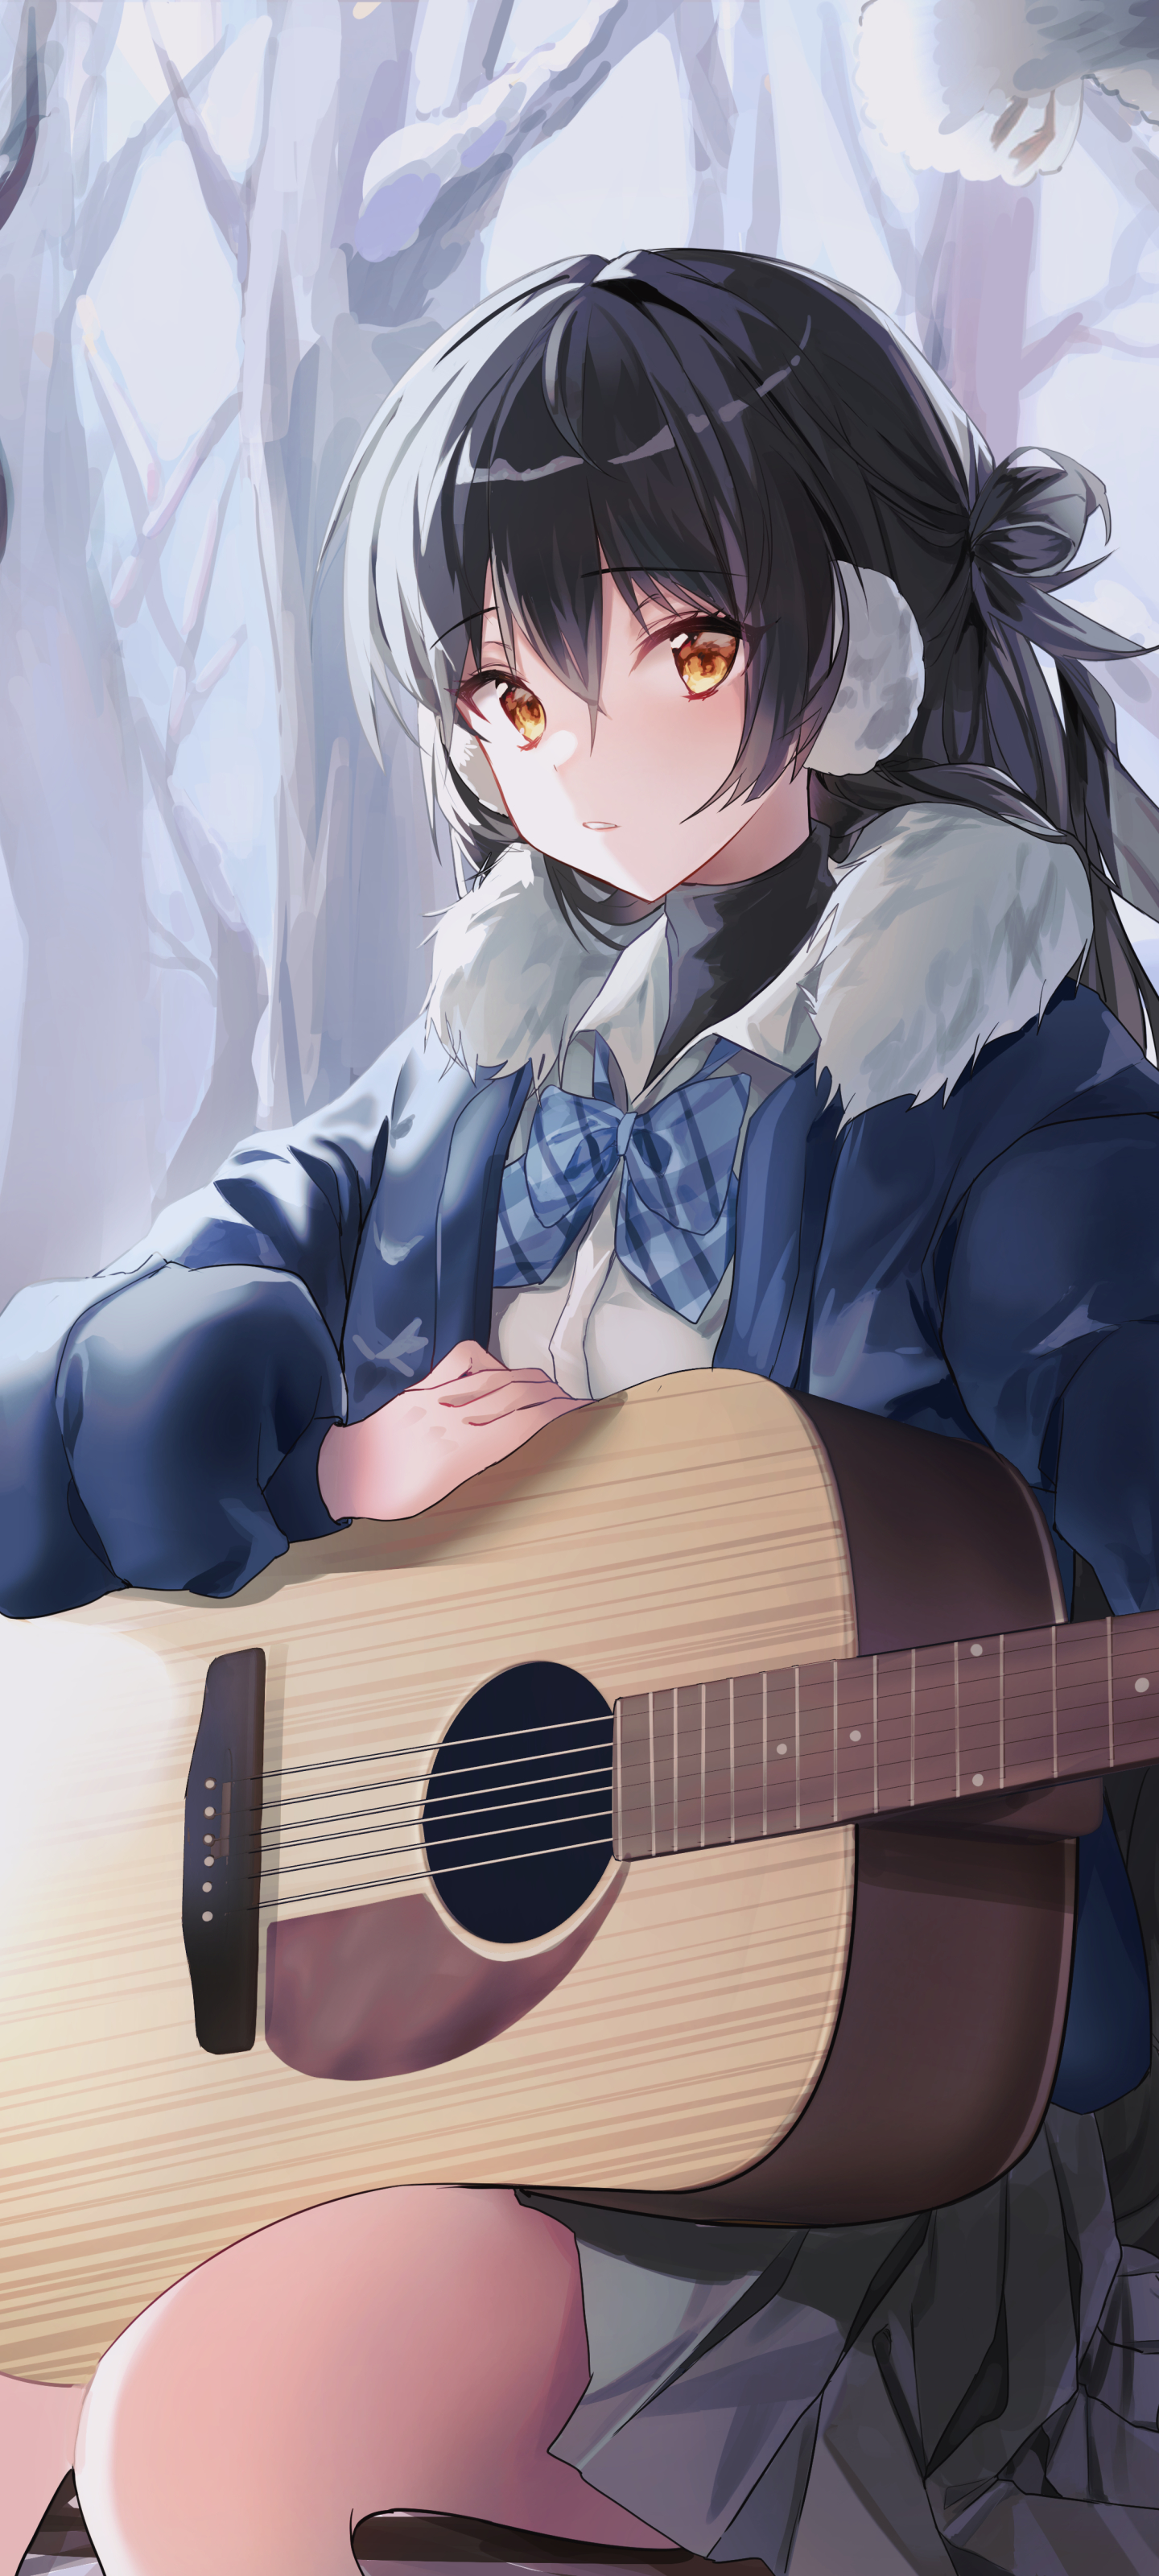 Anime Guitar Girl GIFs  Tenor